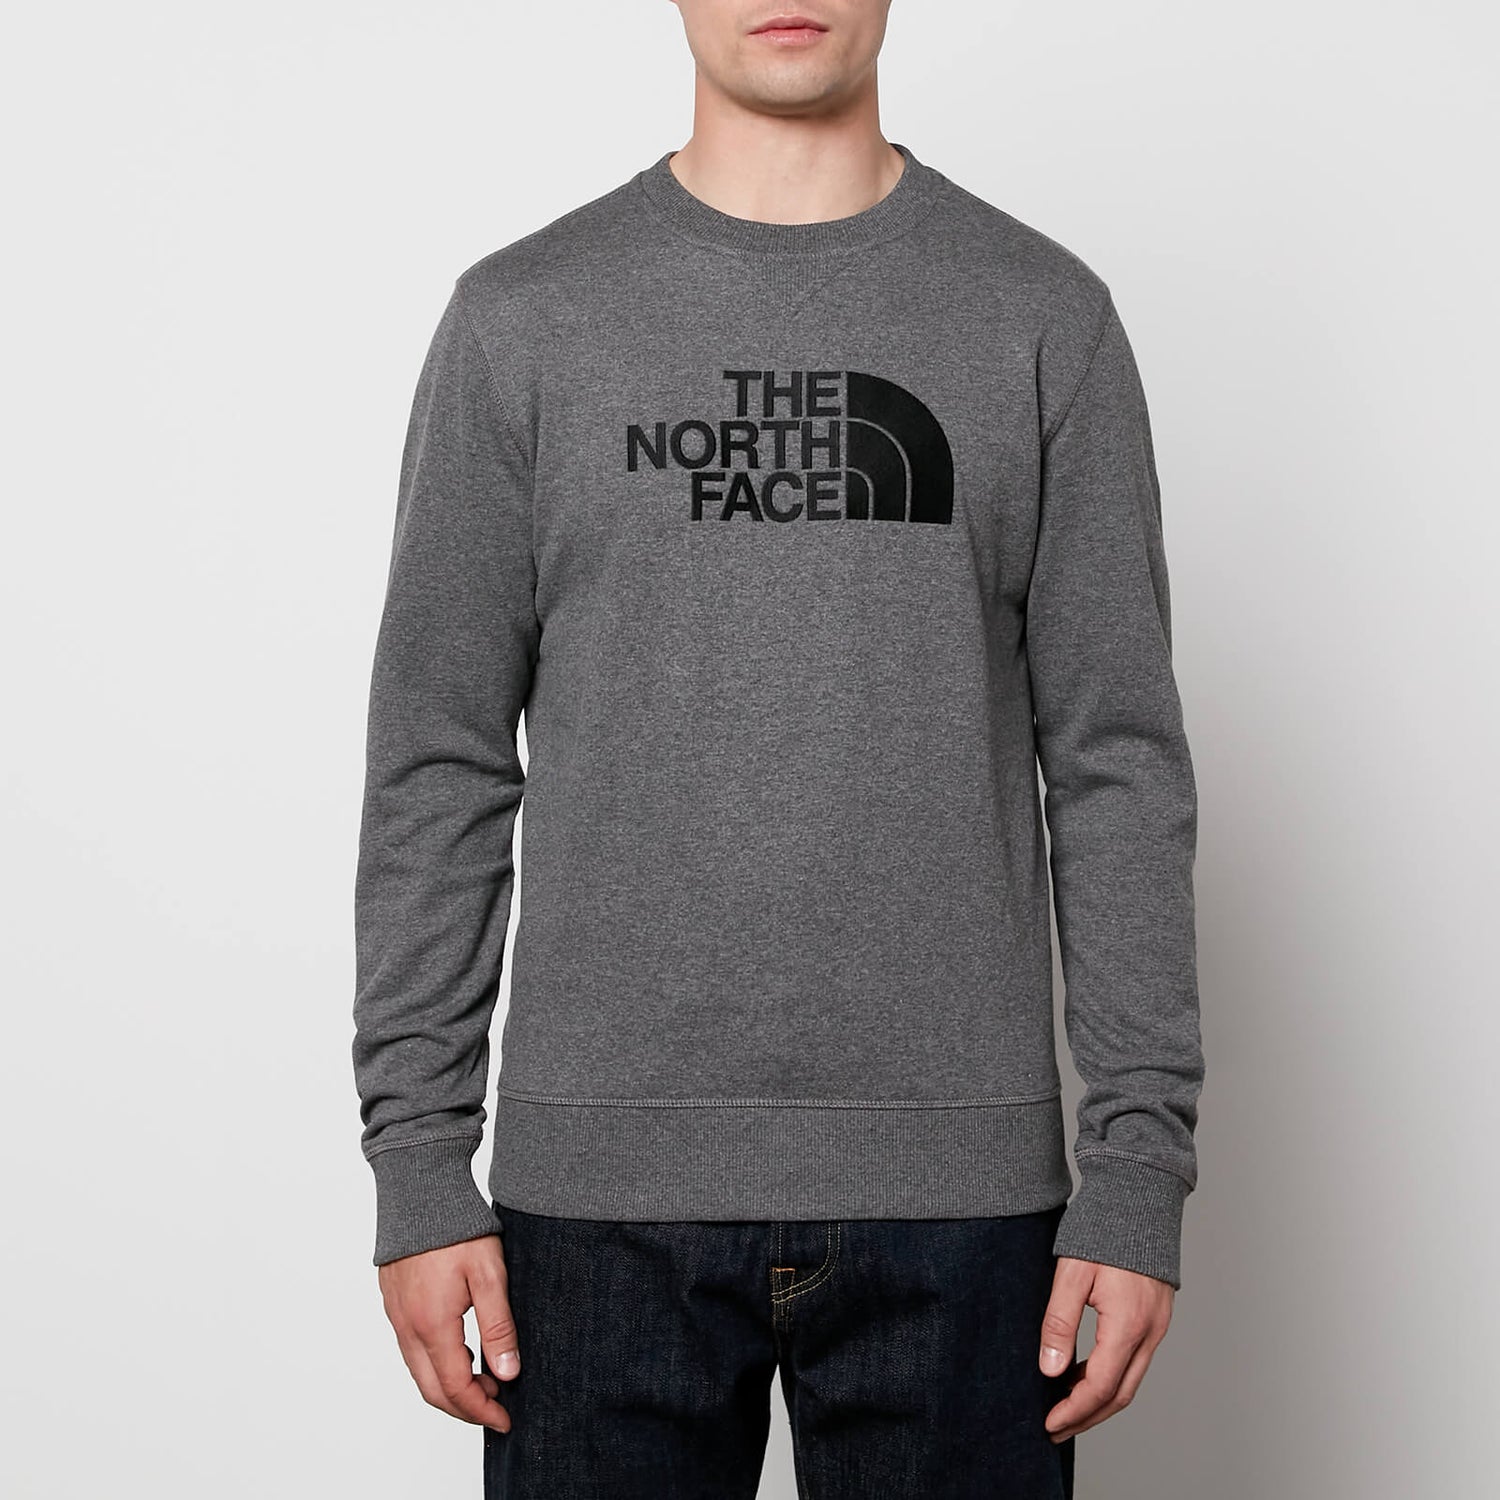 The North Face Men's Drew Peak Light Crew Sweatshirt - TNF Medium Grey - S